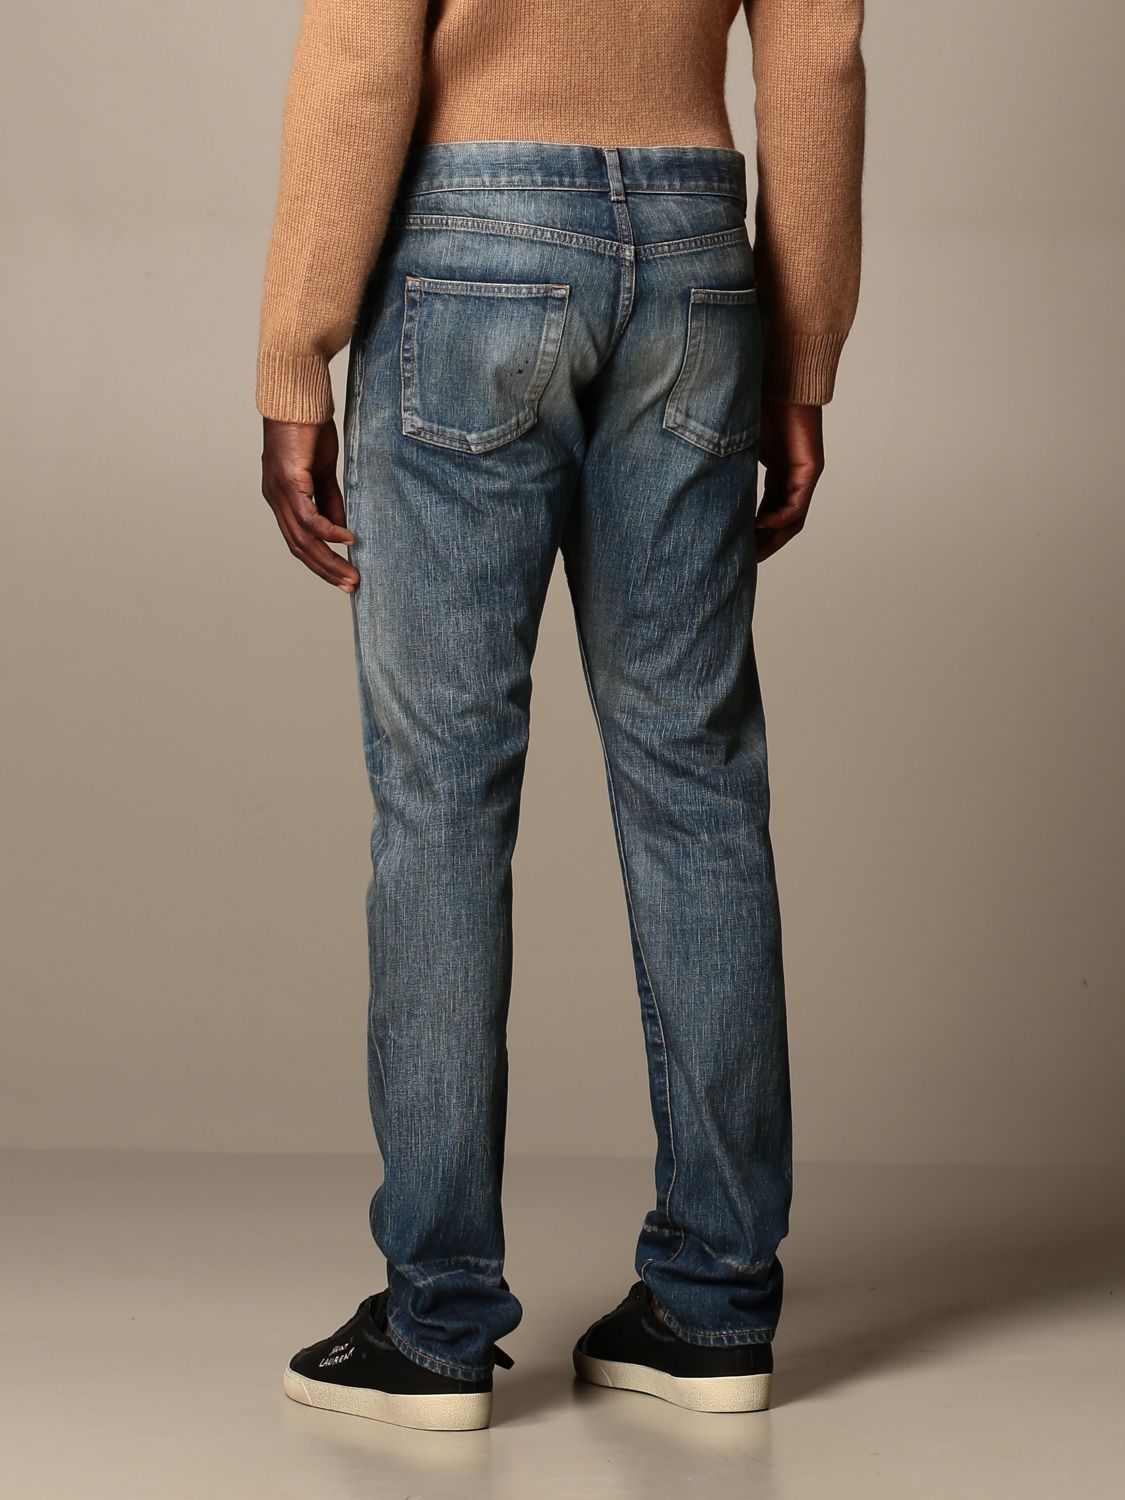 SAINT LAURENT: jeans in used denim - Denim | Saint Laurent jeans 597052